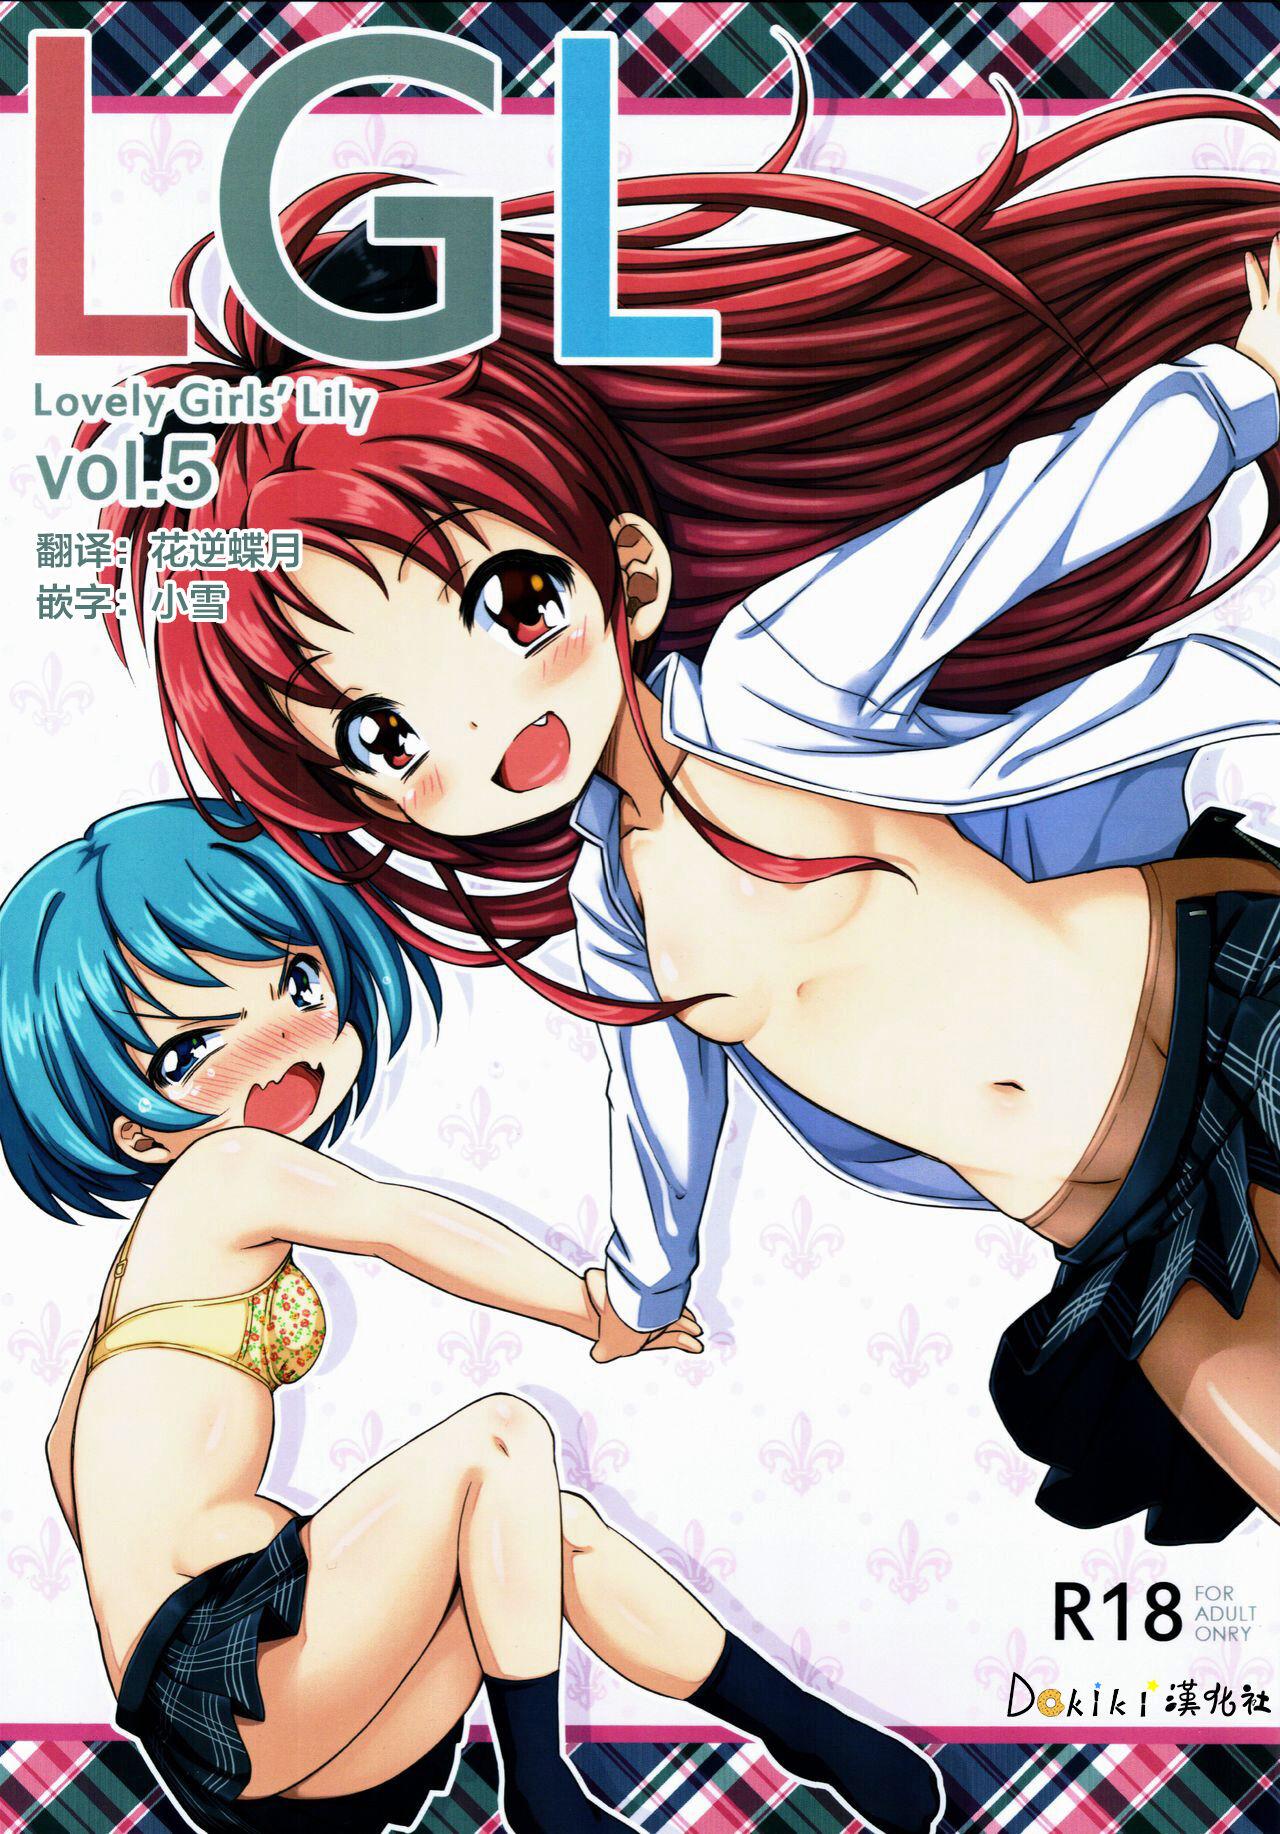 Lovely Girls' Lily vol. 5 1